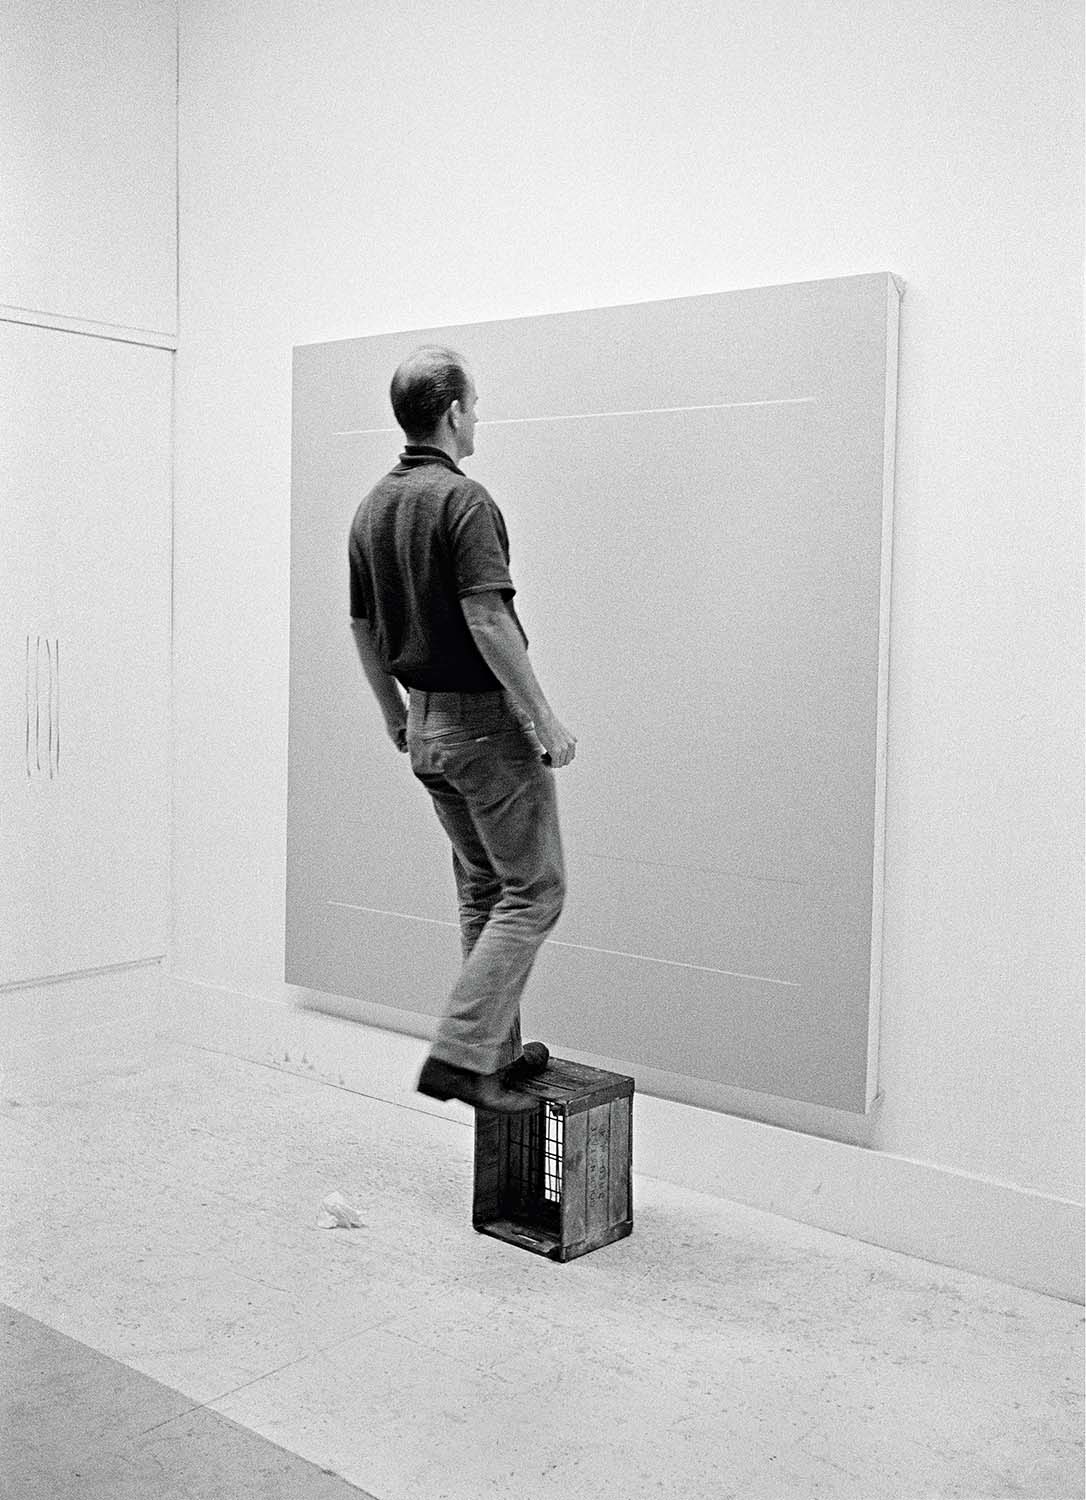  ROBERT IRWIN   Standing on crate, Bob’s studio, Venice, California, 1962  